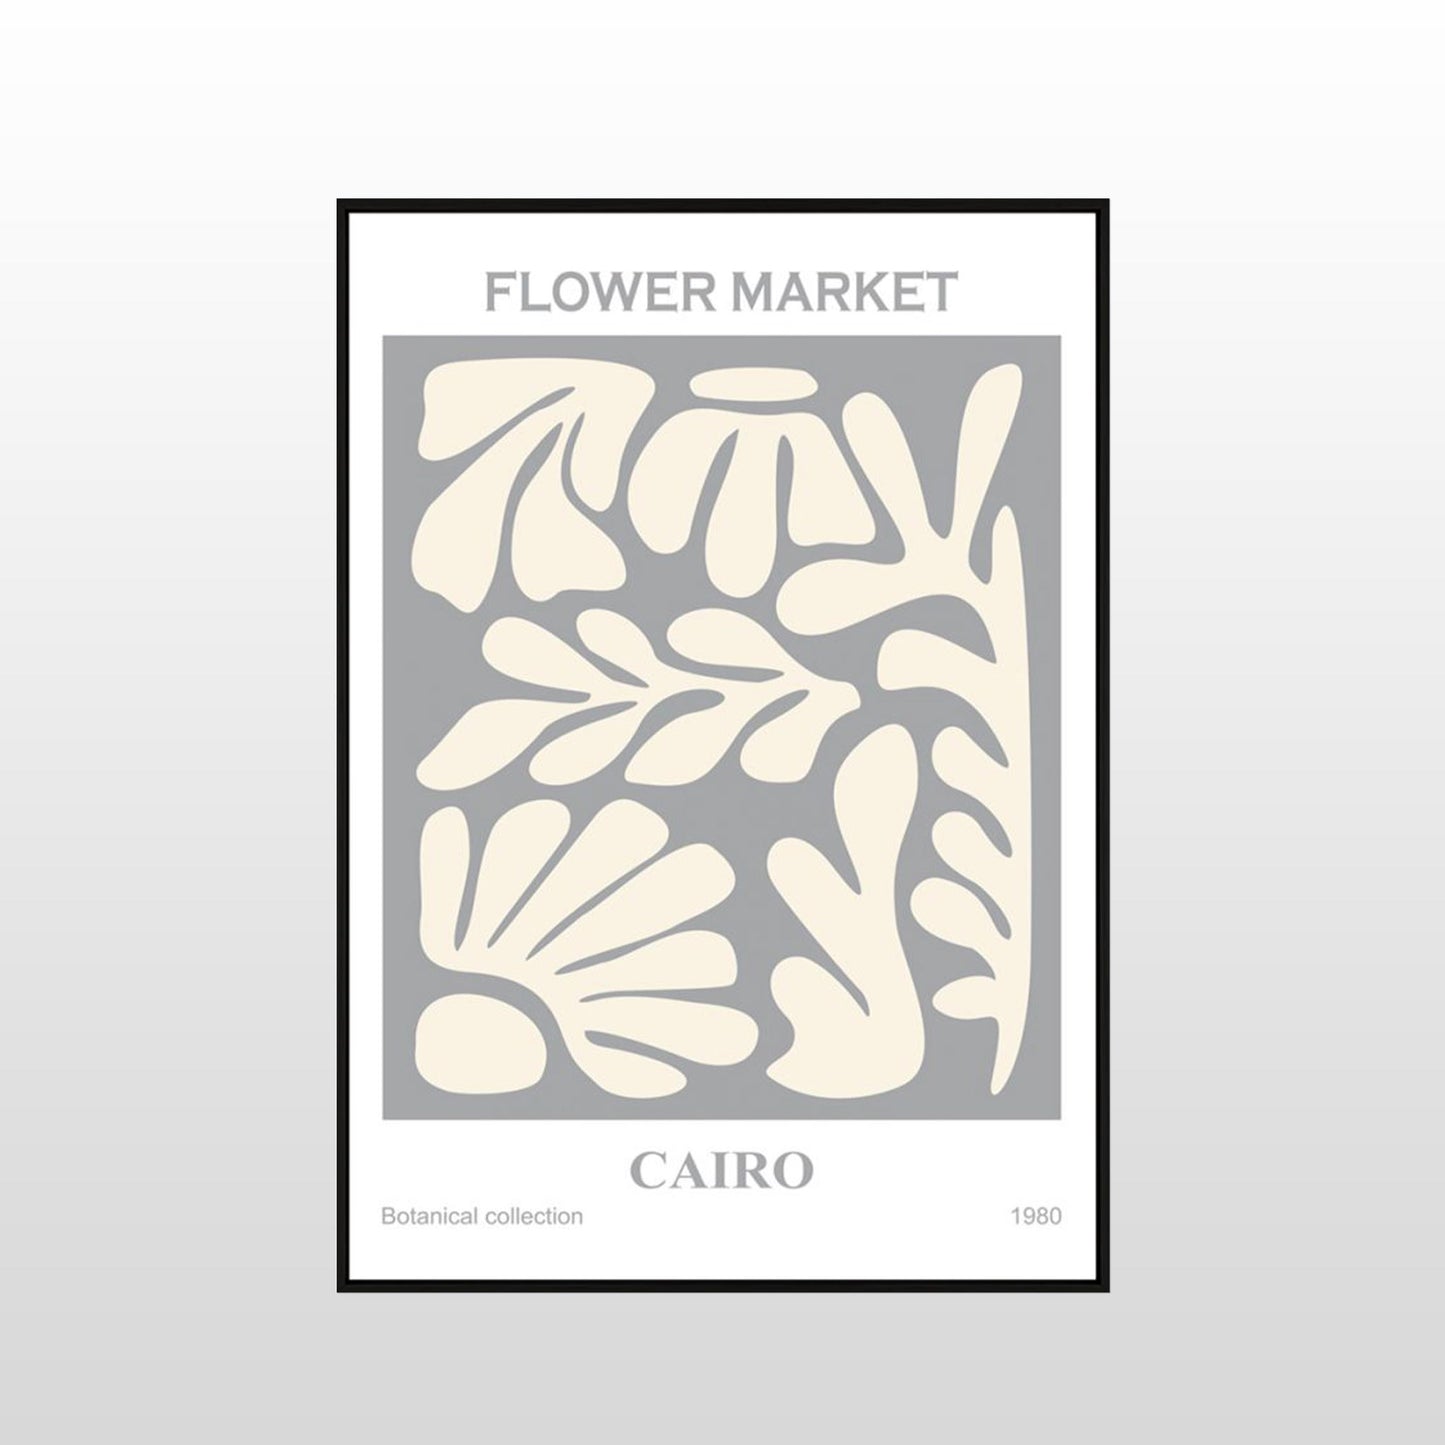 Flower Market Cairo